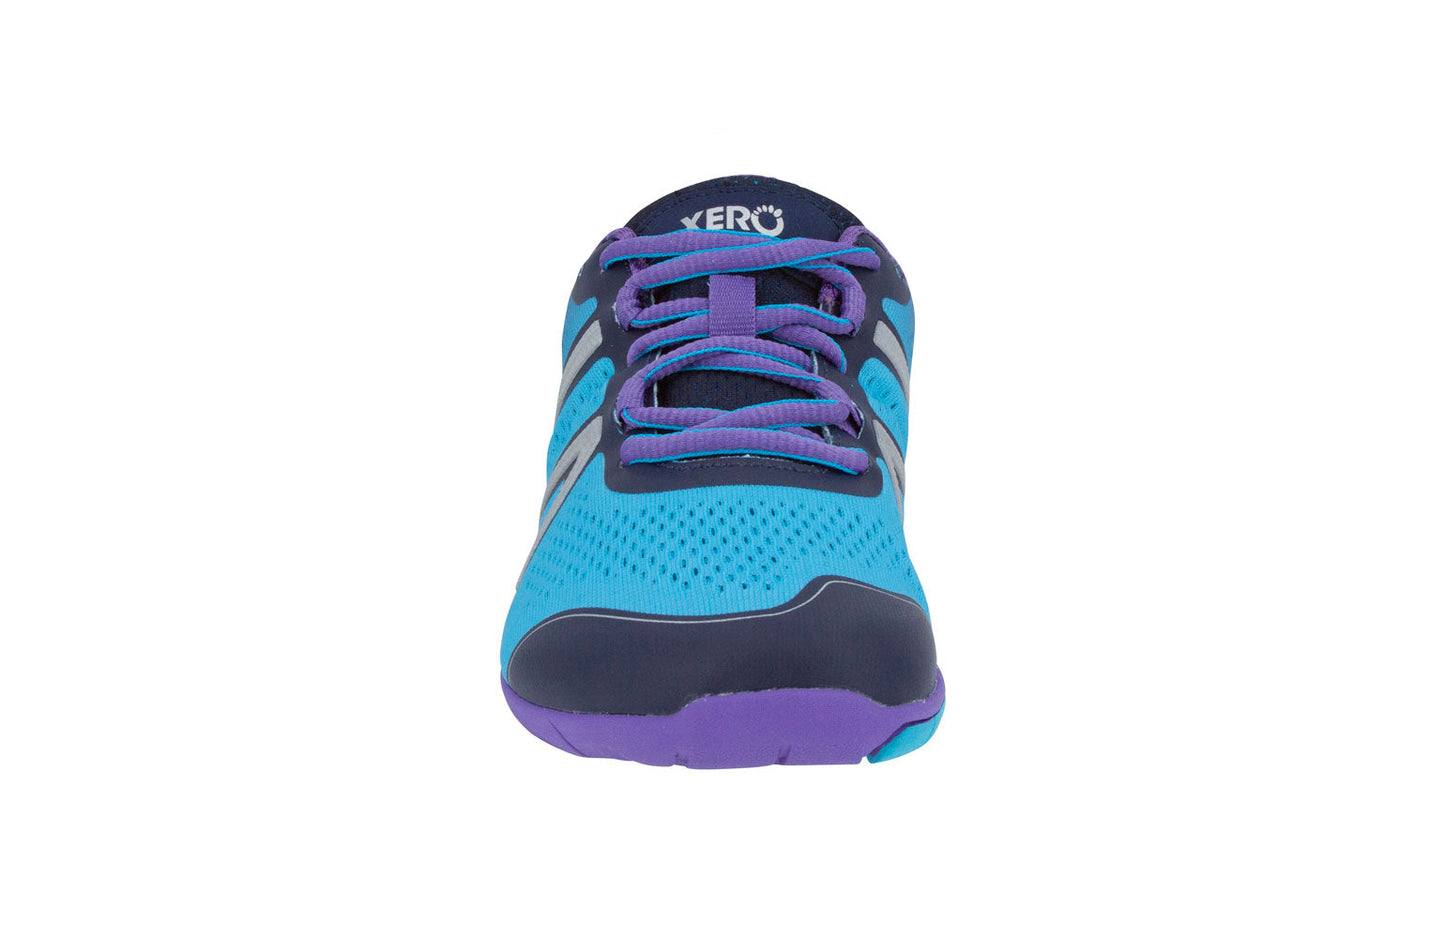 Xero Shoes HFS Womens barfods træningssko/løbesko til kvinder i farven atoll blue, forfra